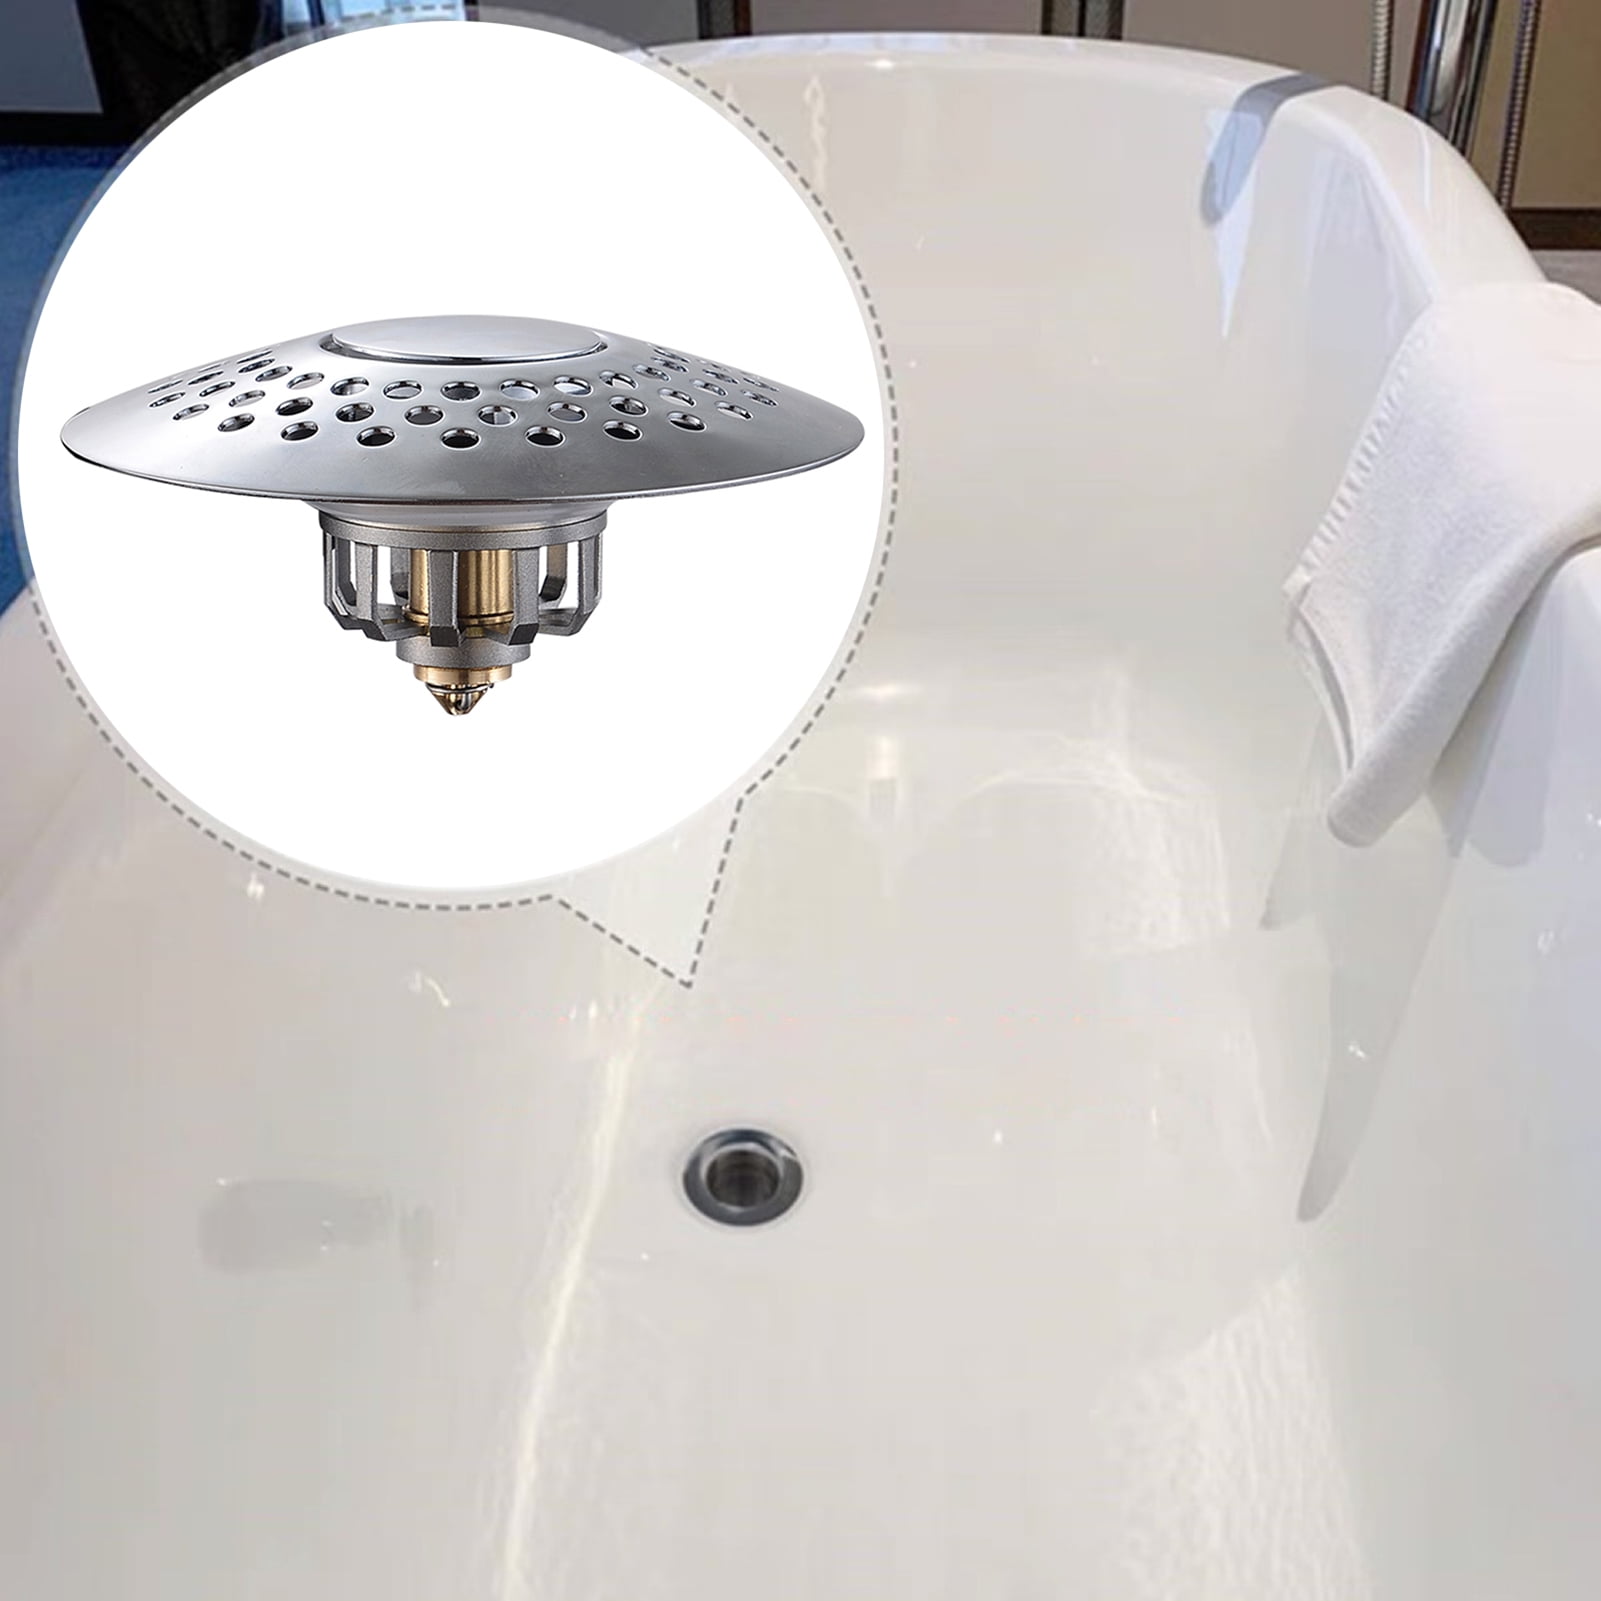 zaa Bathtub Drain Hair Catcher, 2in1 Bathtub Stopper & Drain Strainer,  Pop-up Bathtub Drain Plug Anti-Clogged Tub Stopper Cover with Detachable